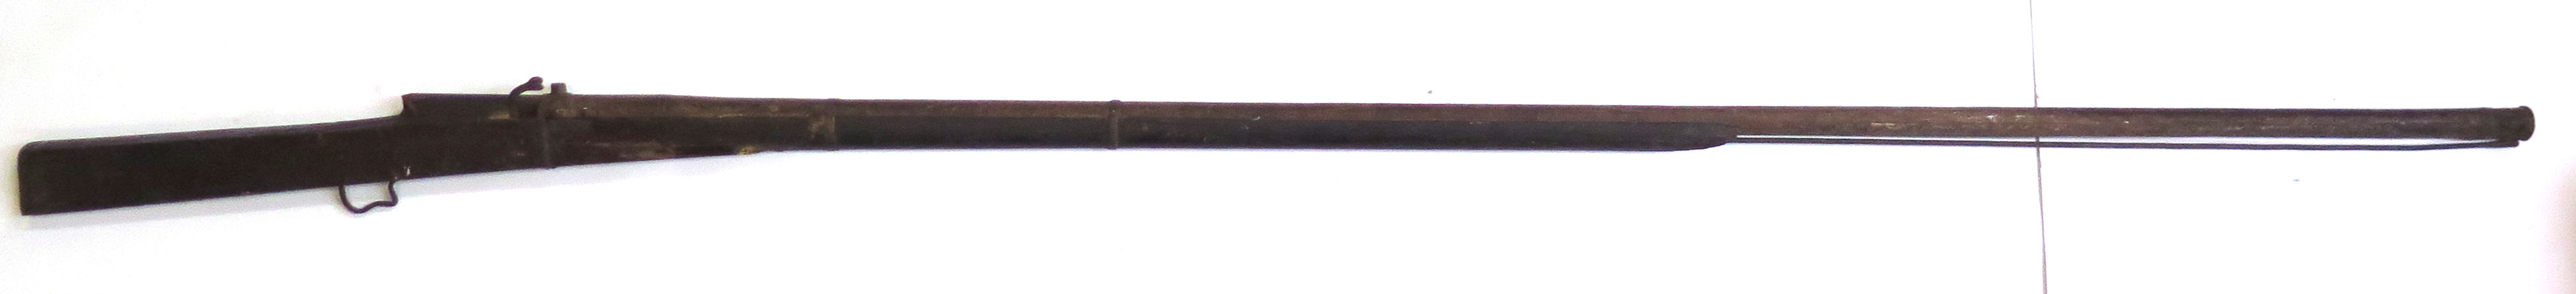 Toradar, smide med trästock, Indien, 18-1900-tal, luntlåsmekanism, _13186a_lg.jpeg